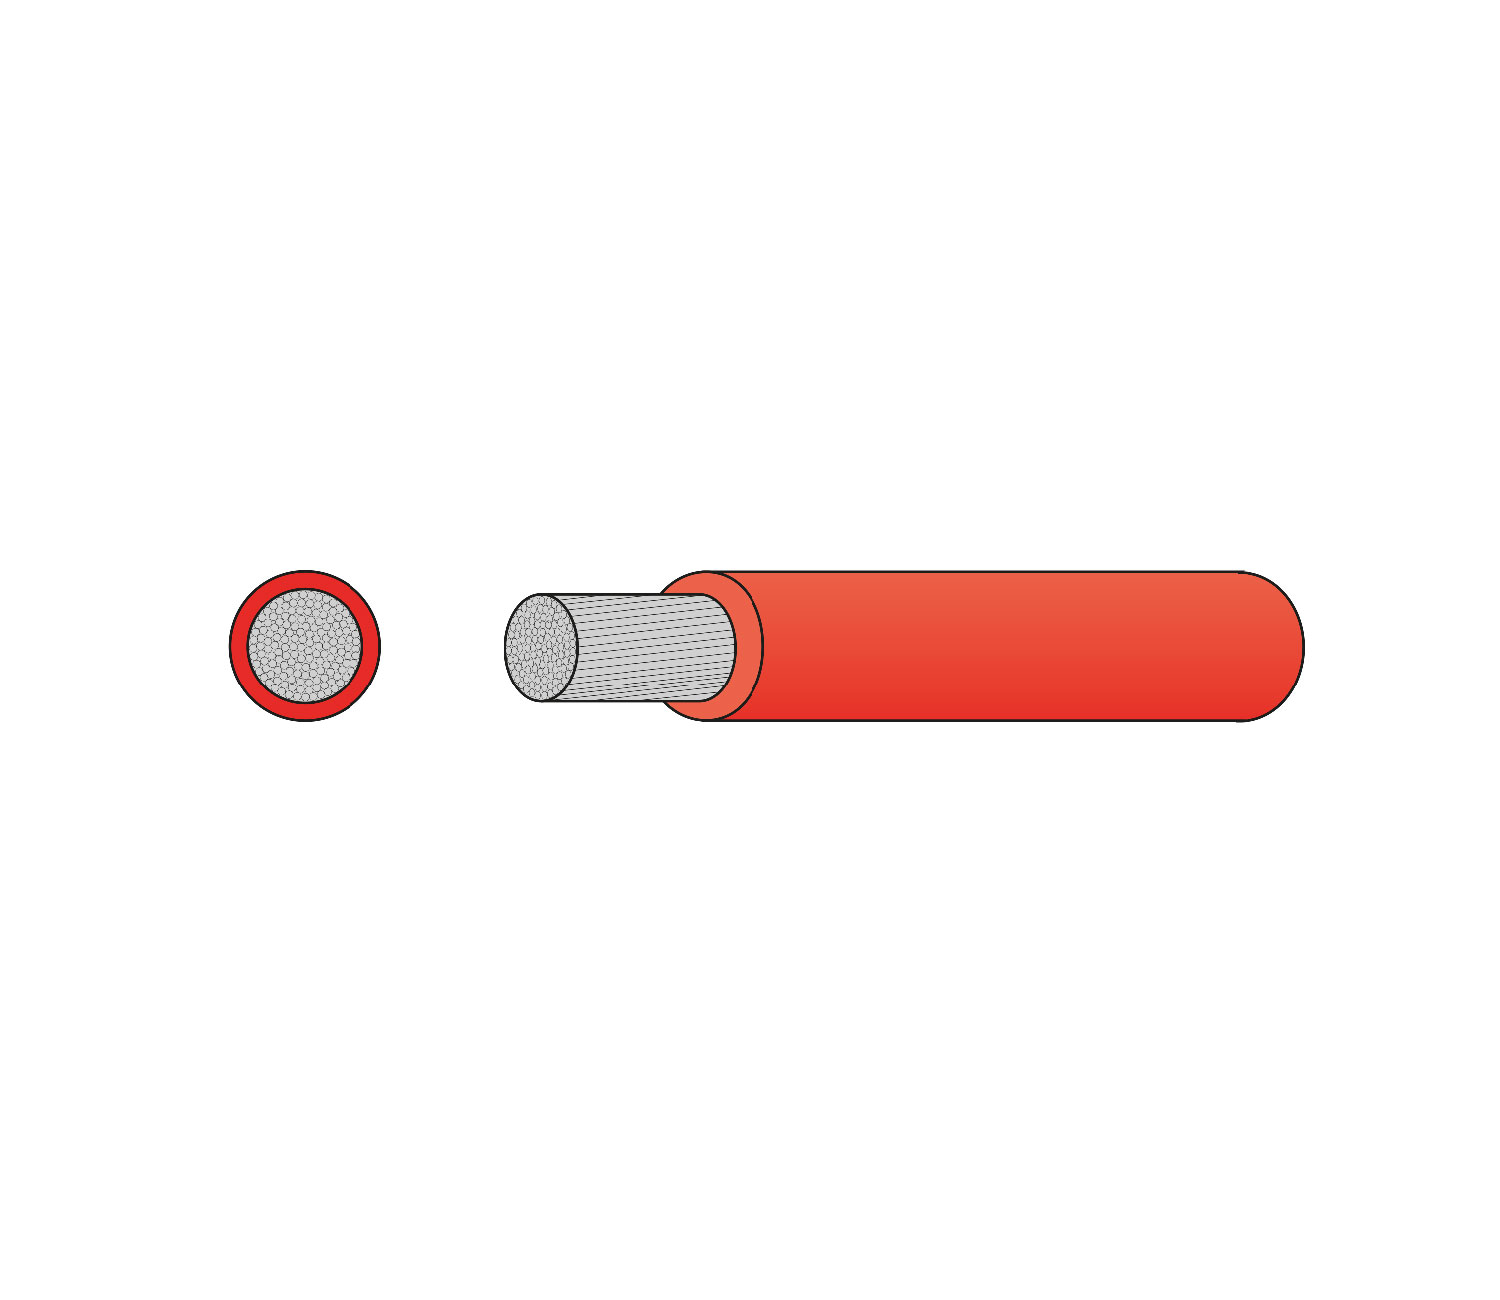 OCEANFLEX - Förtent batterikabel 35mm2, 50m, Röd